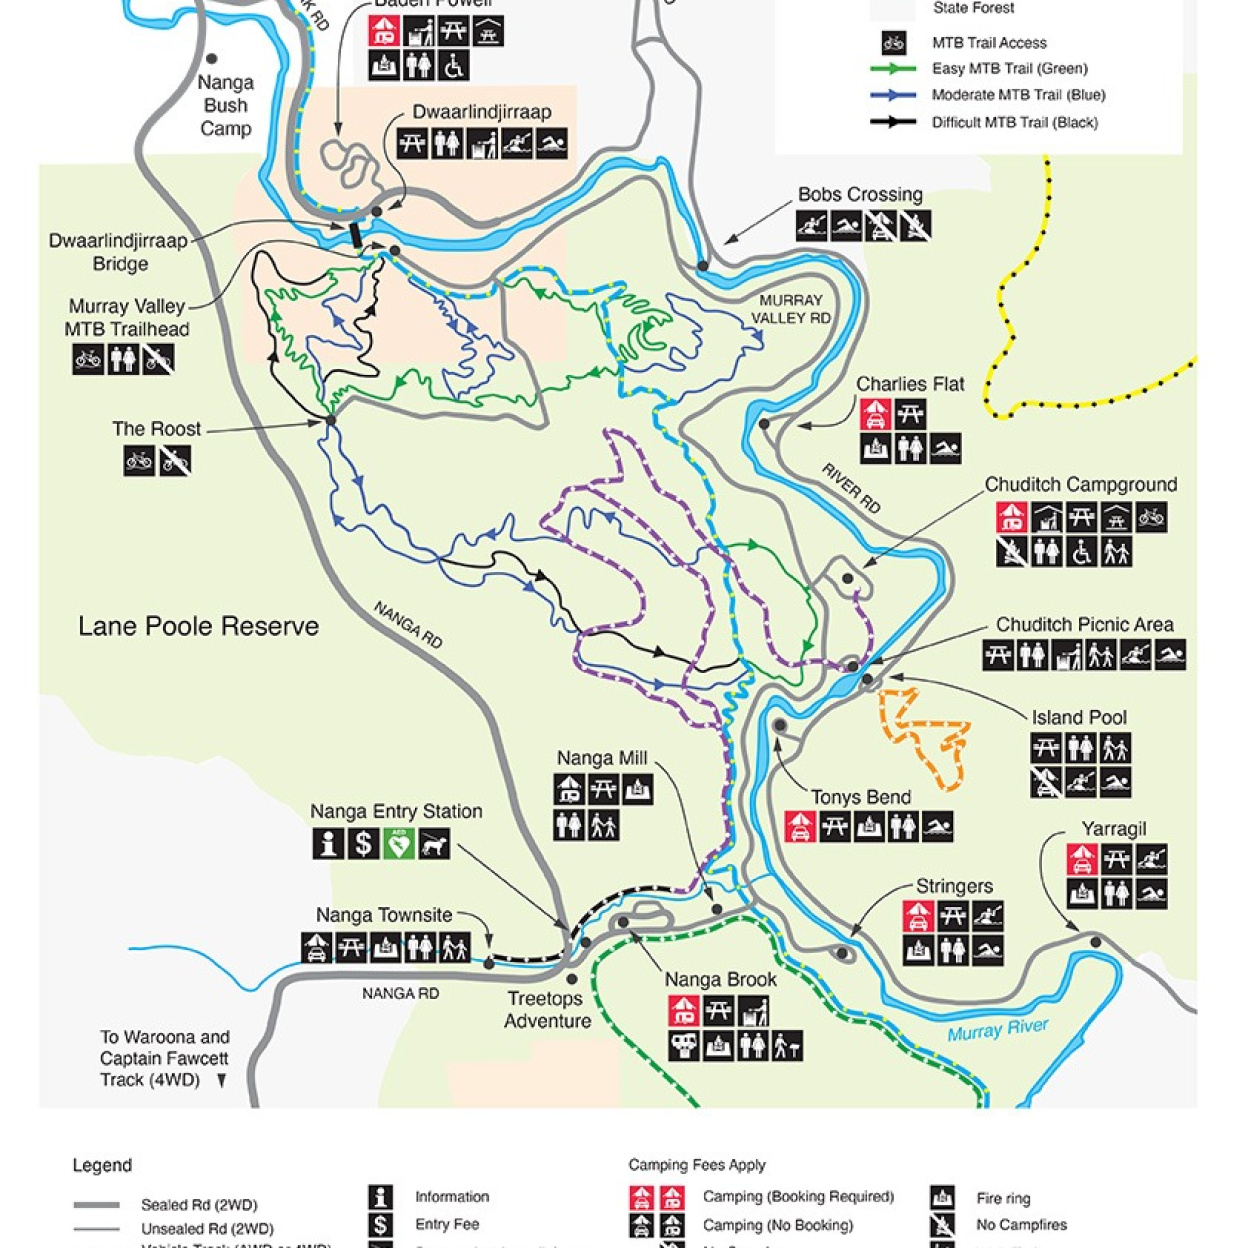 Lane Poole Reserve Map